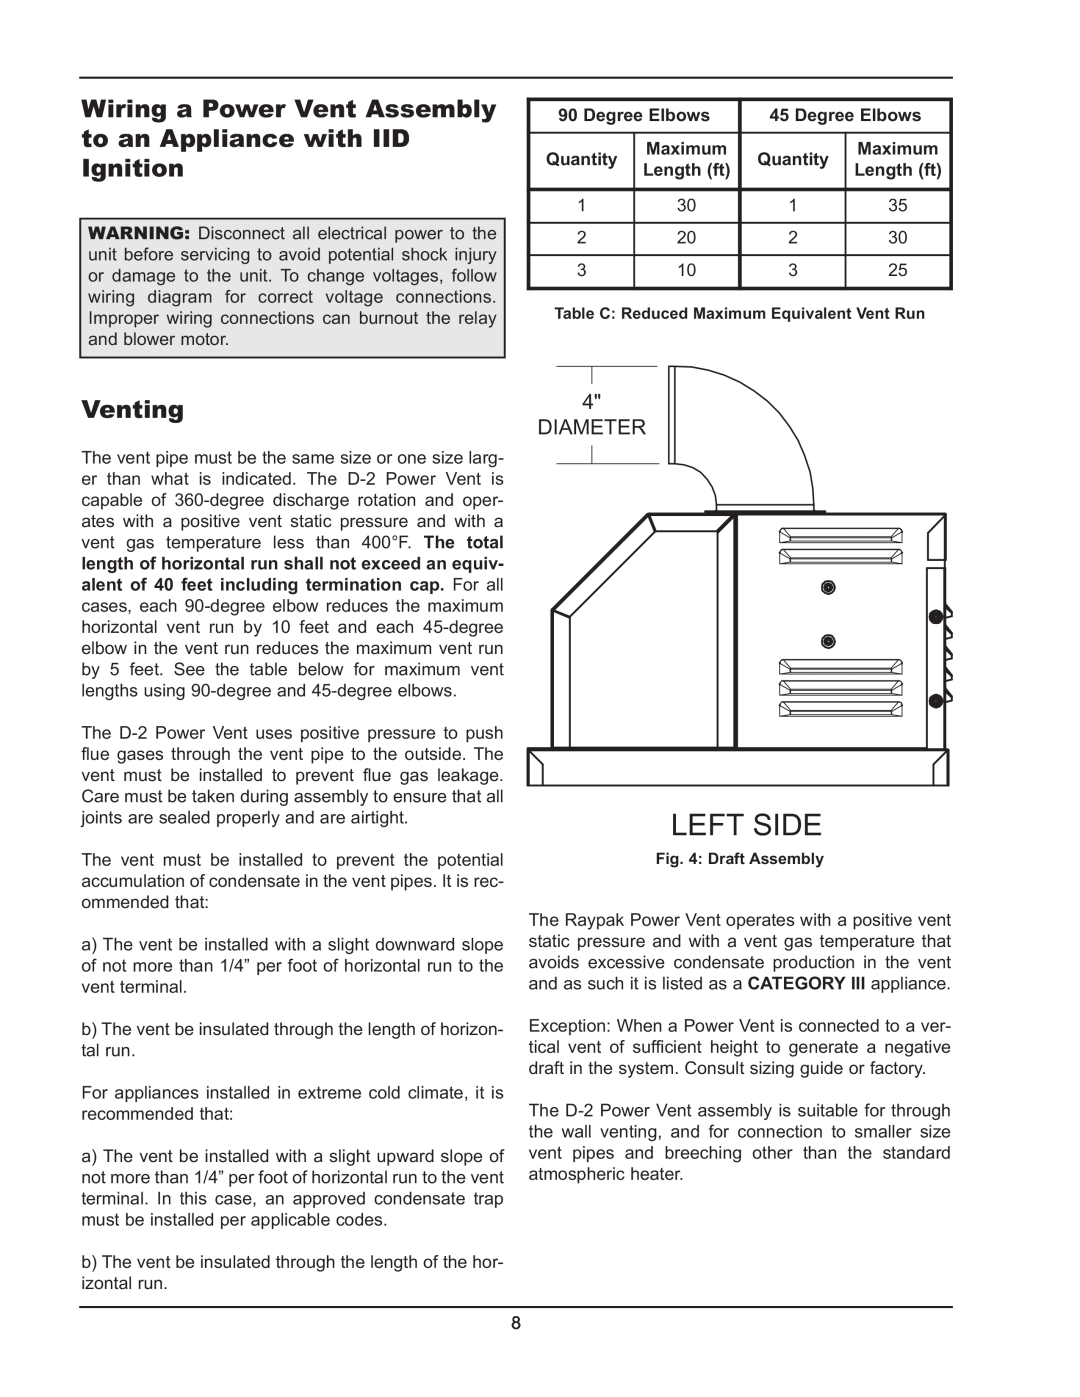 Raypak D2 manual Venting, Left Side, Diameter, Degree Elbows, Quantity, Length ft 